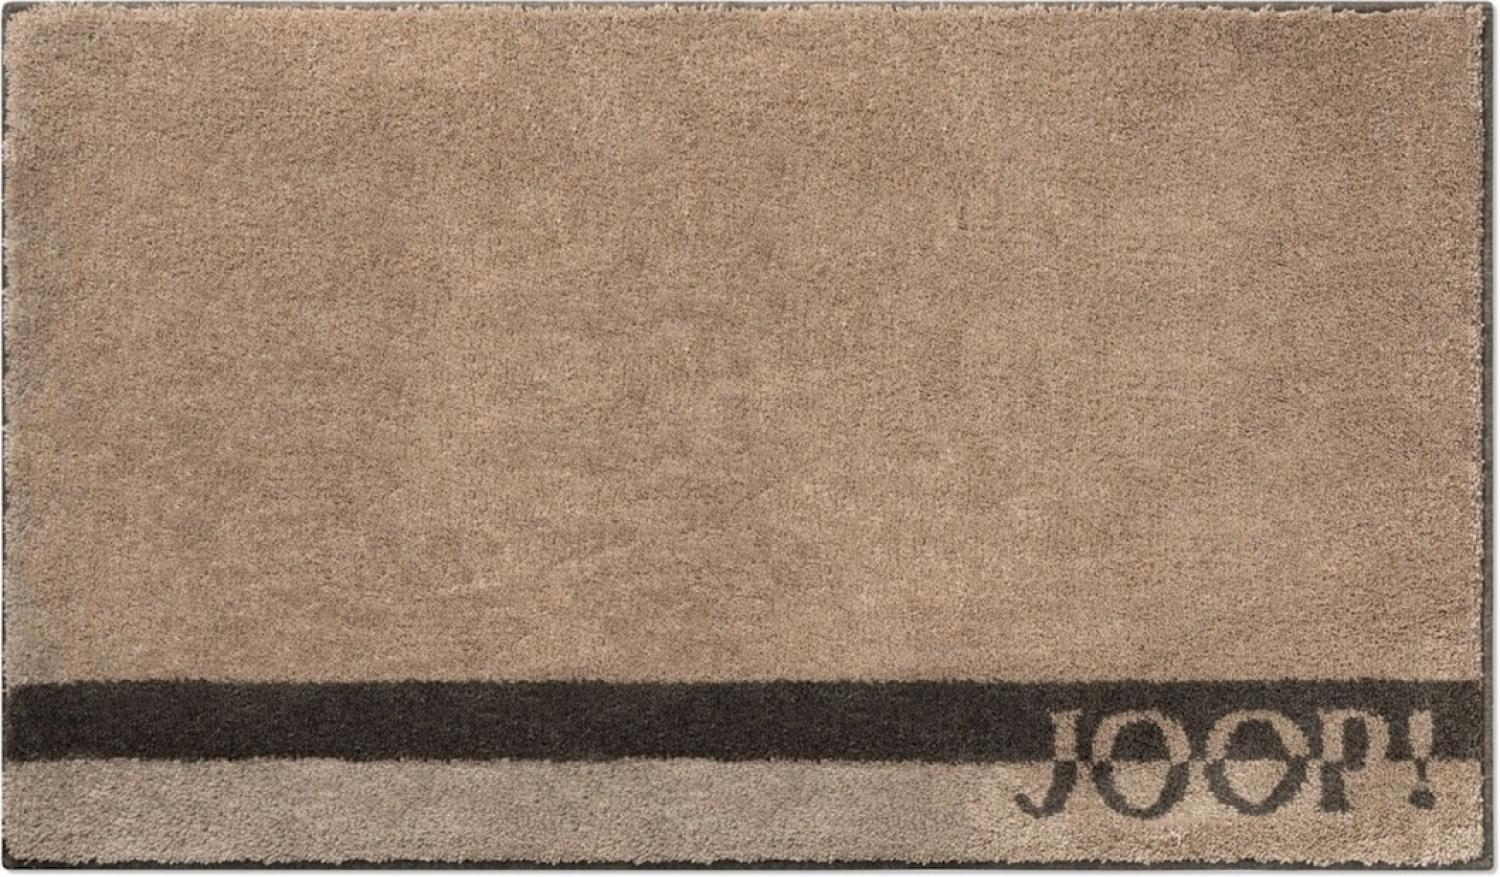 JOOP! Badteppich 141 LOGO STRIPES Sand 70 x 120 cm Bild 1